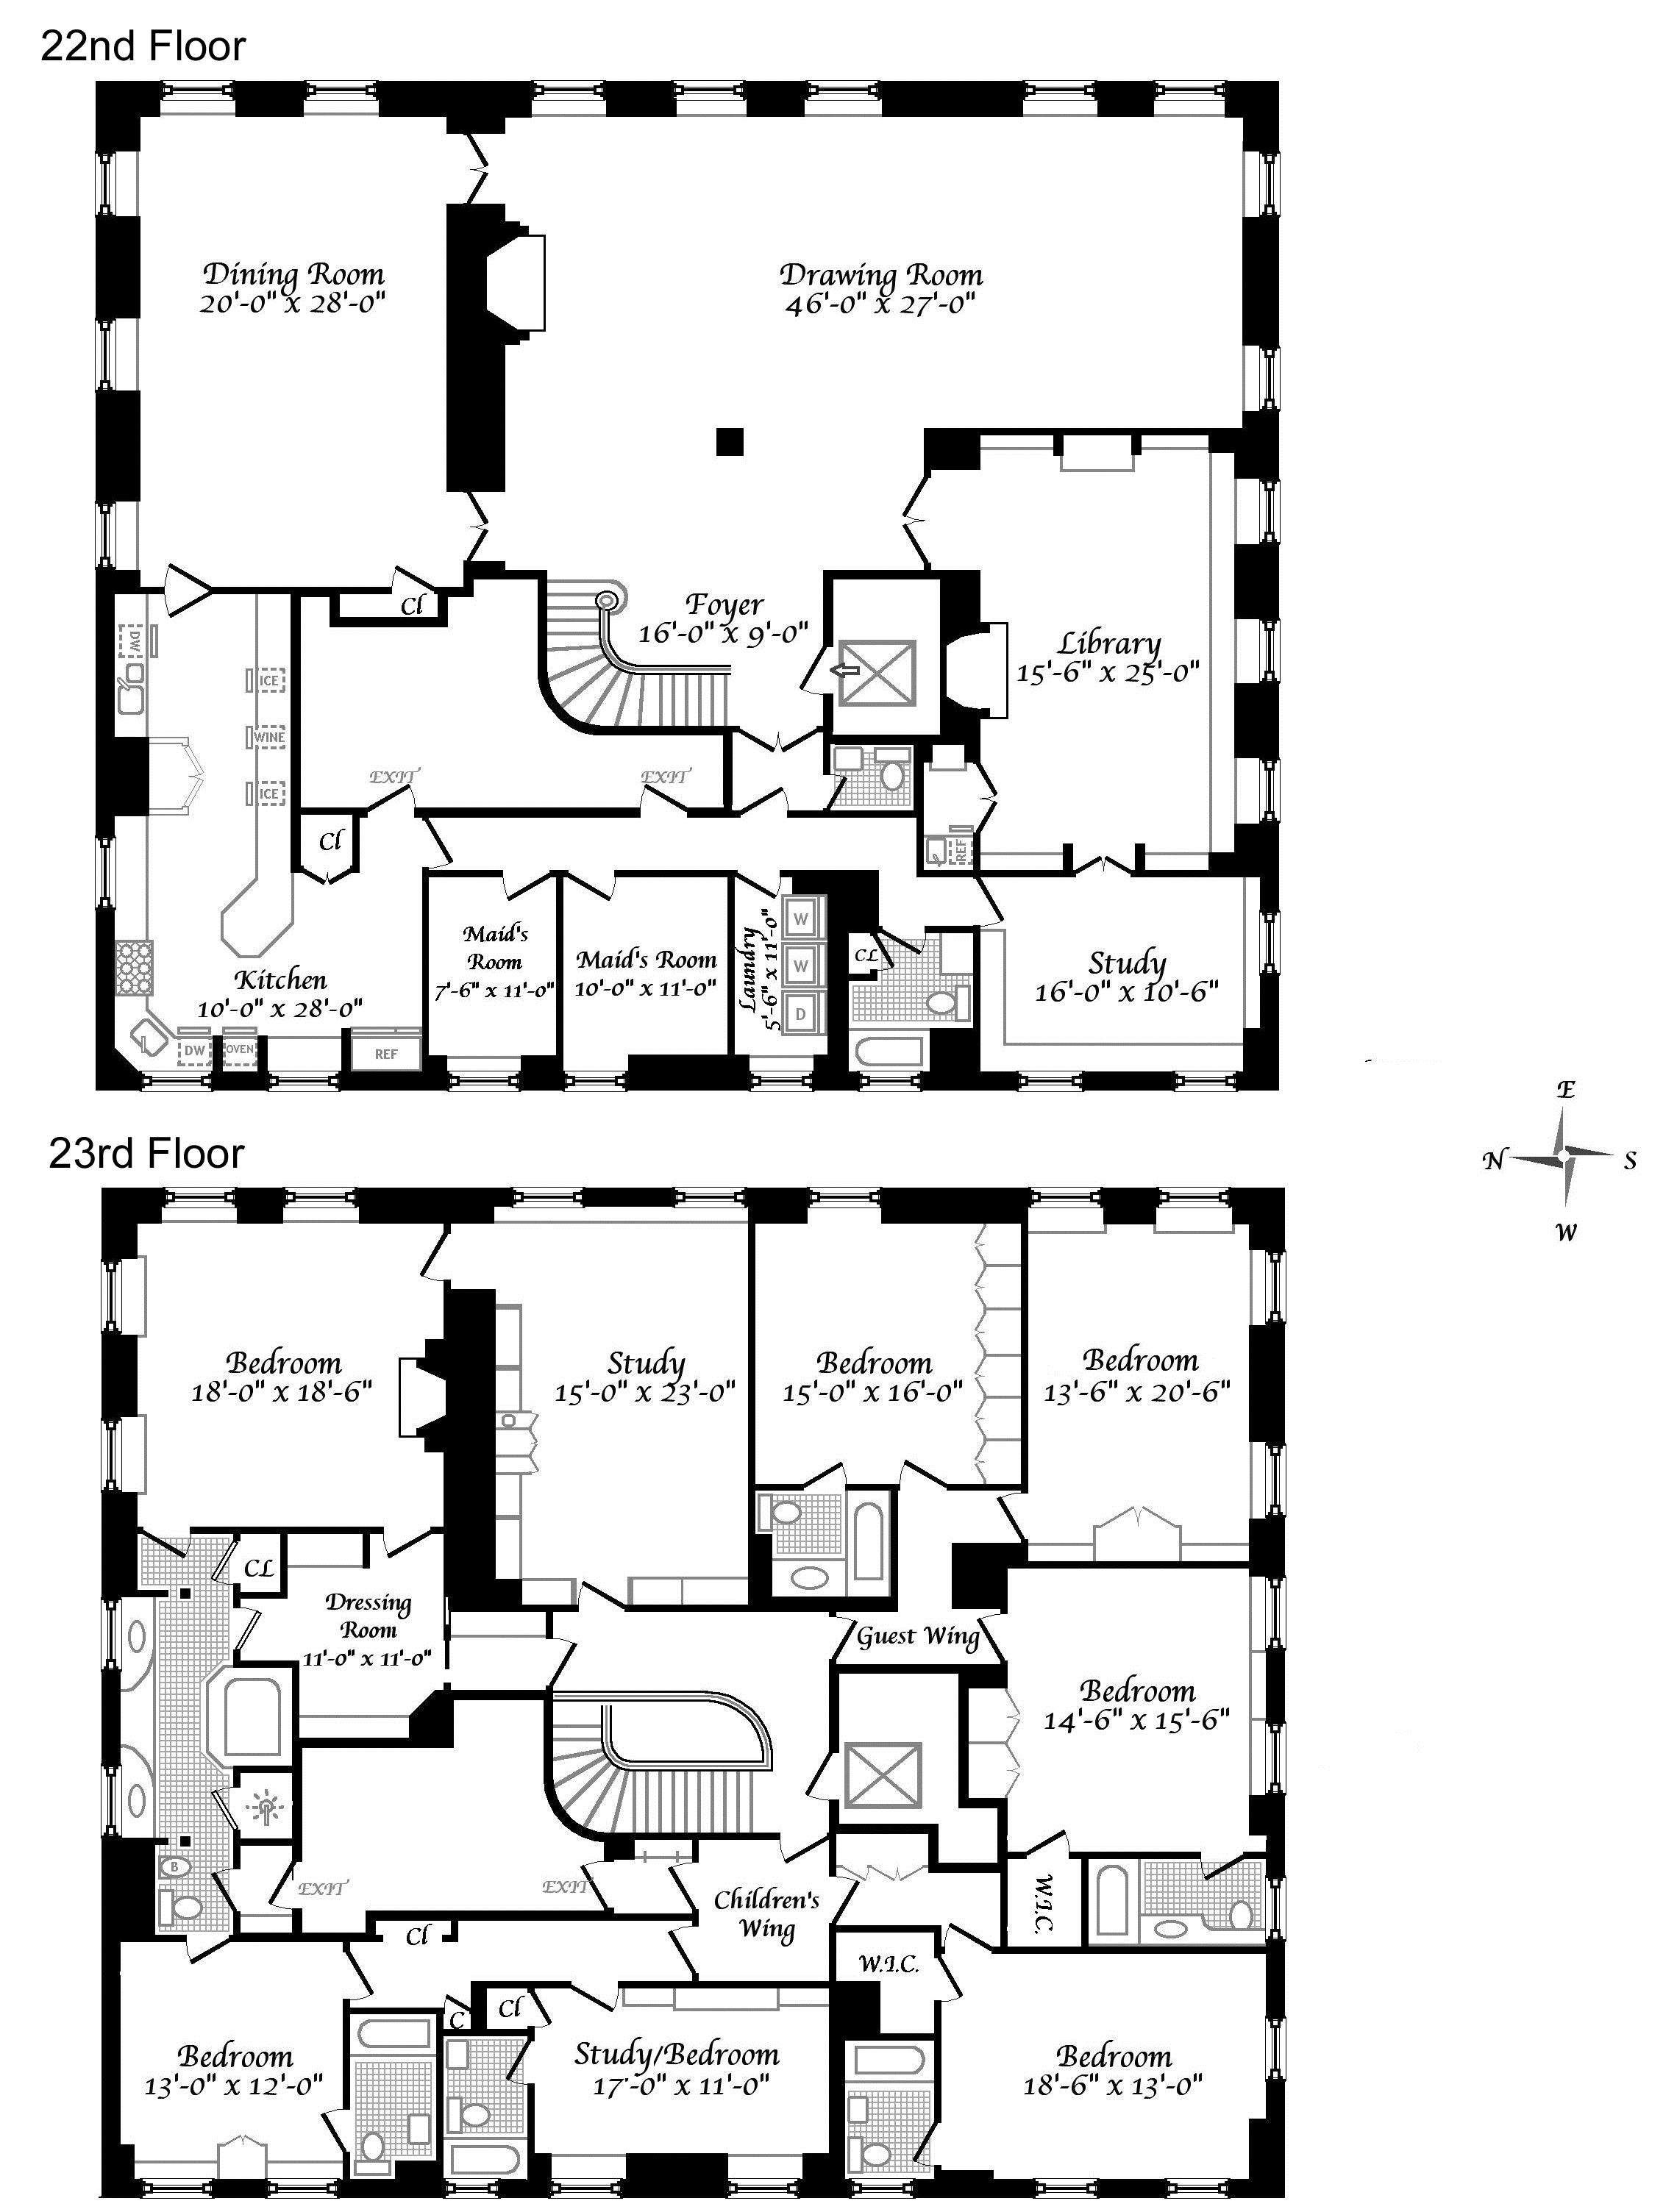 floorplan0 Penthouse apartment floor plan, Luxury floor